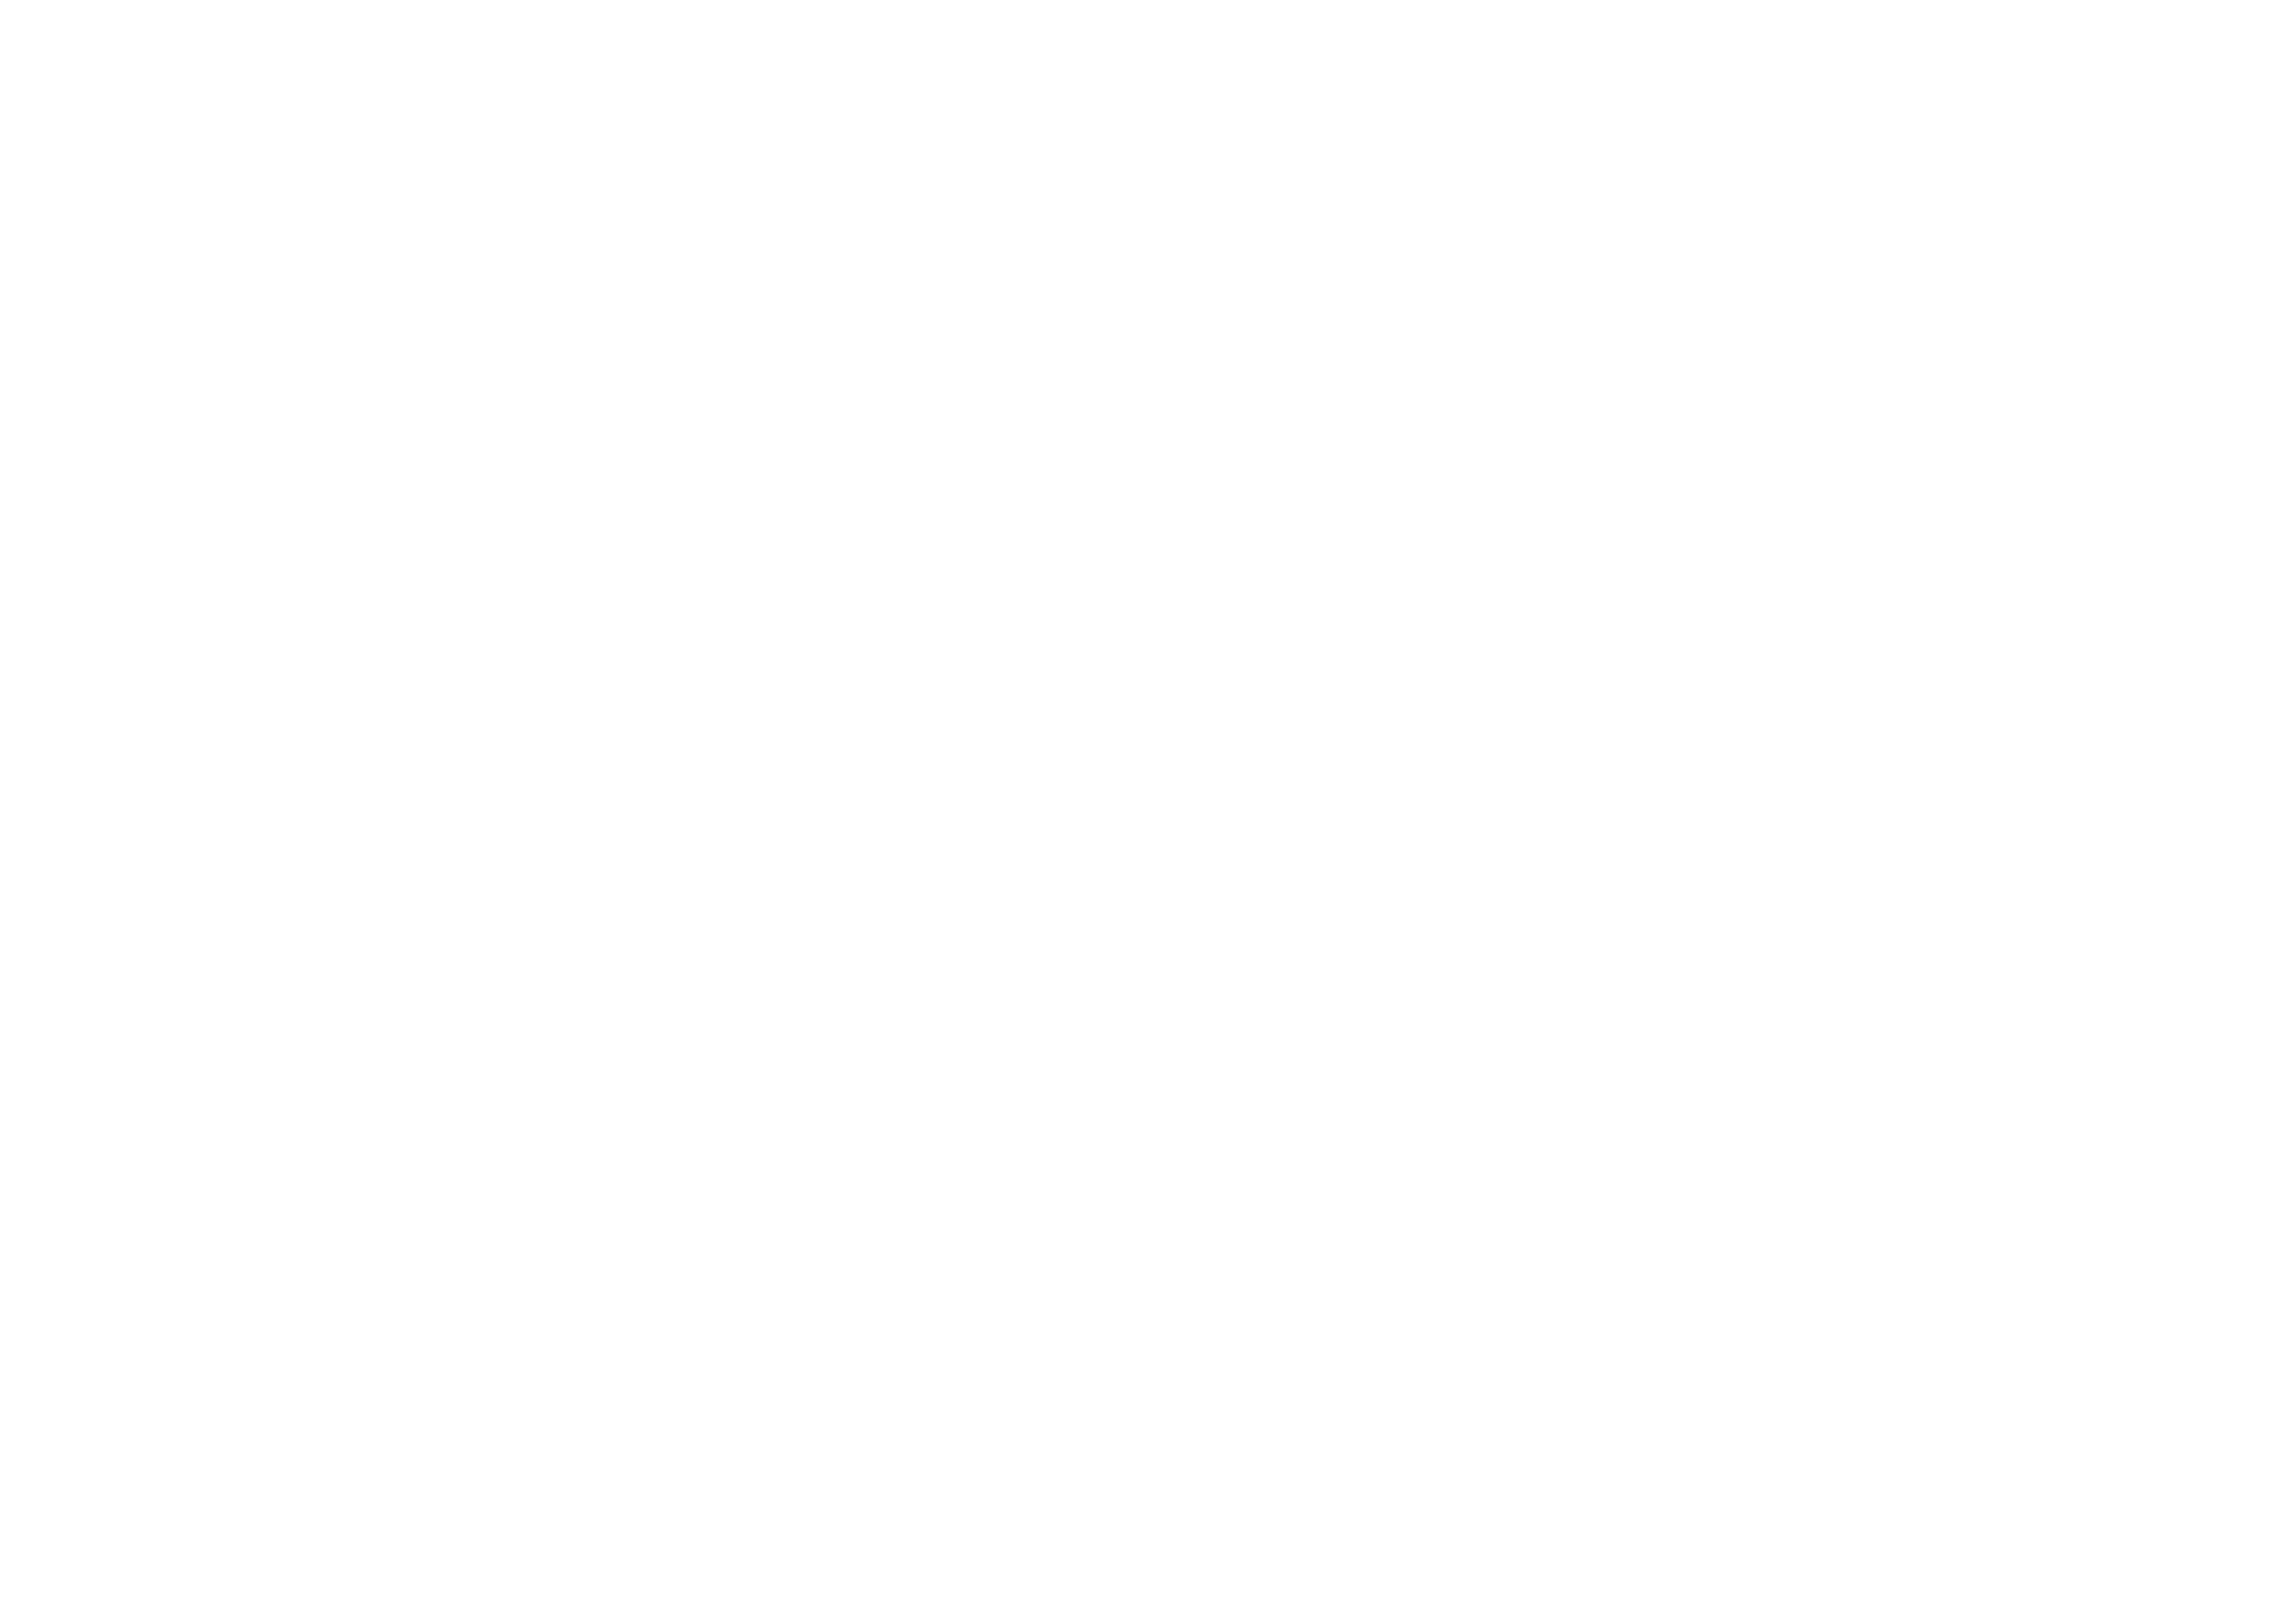 KDDI VideoPass